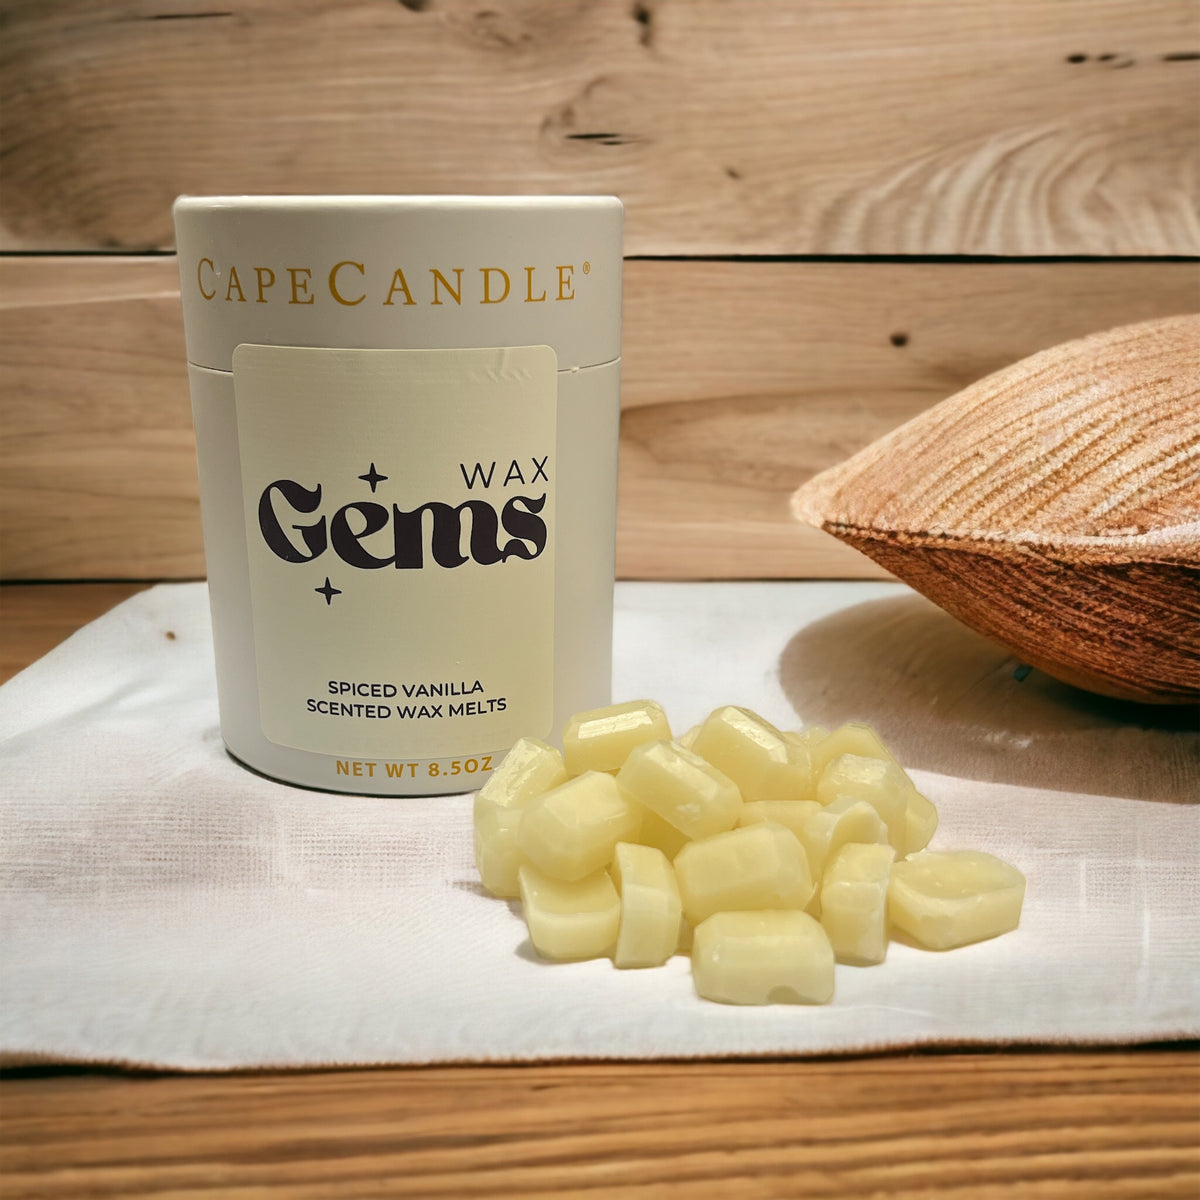 Spiced Vanilla 8.5oz Wax Gems by Cape Candle